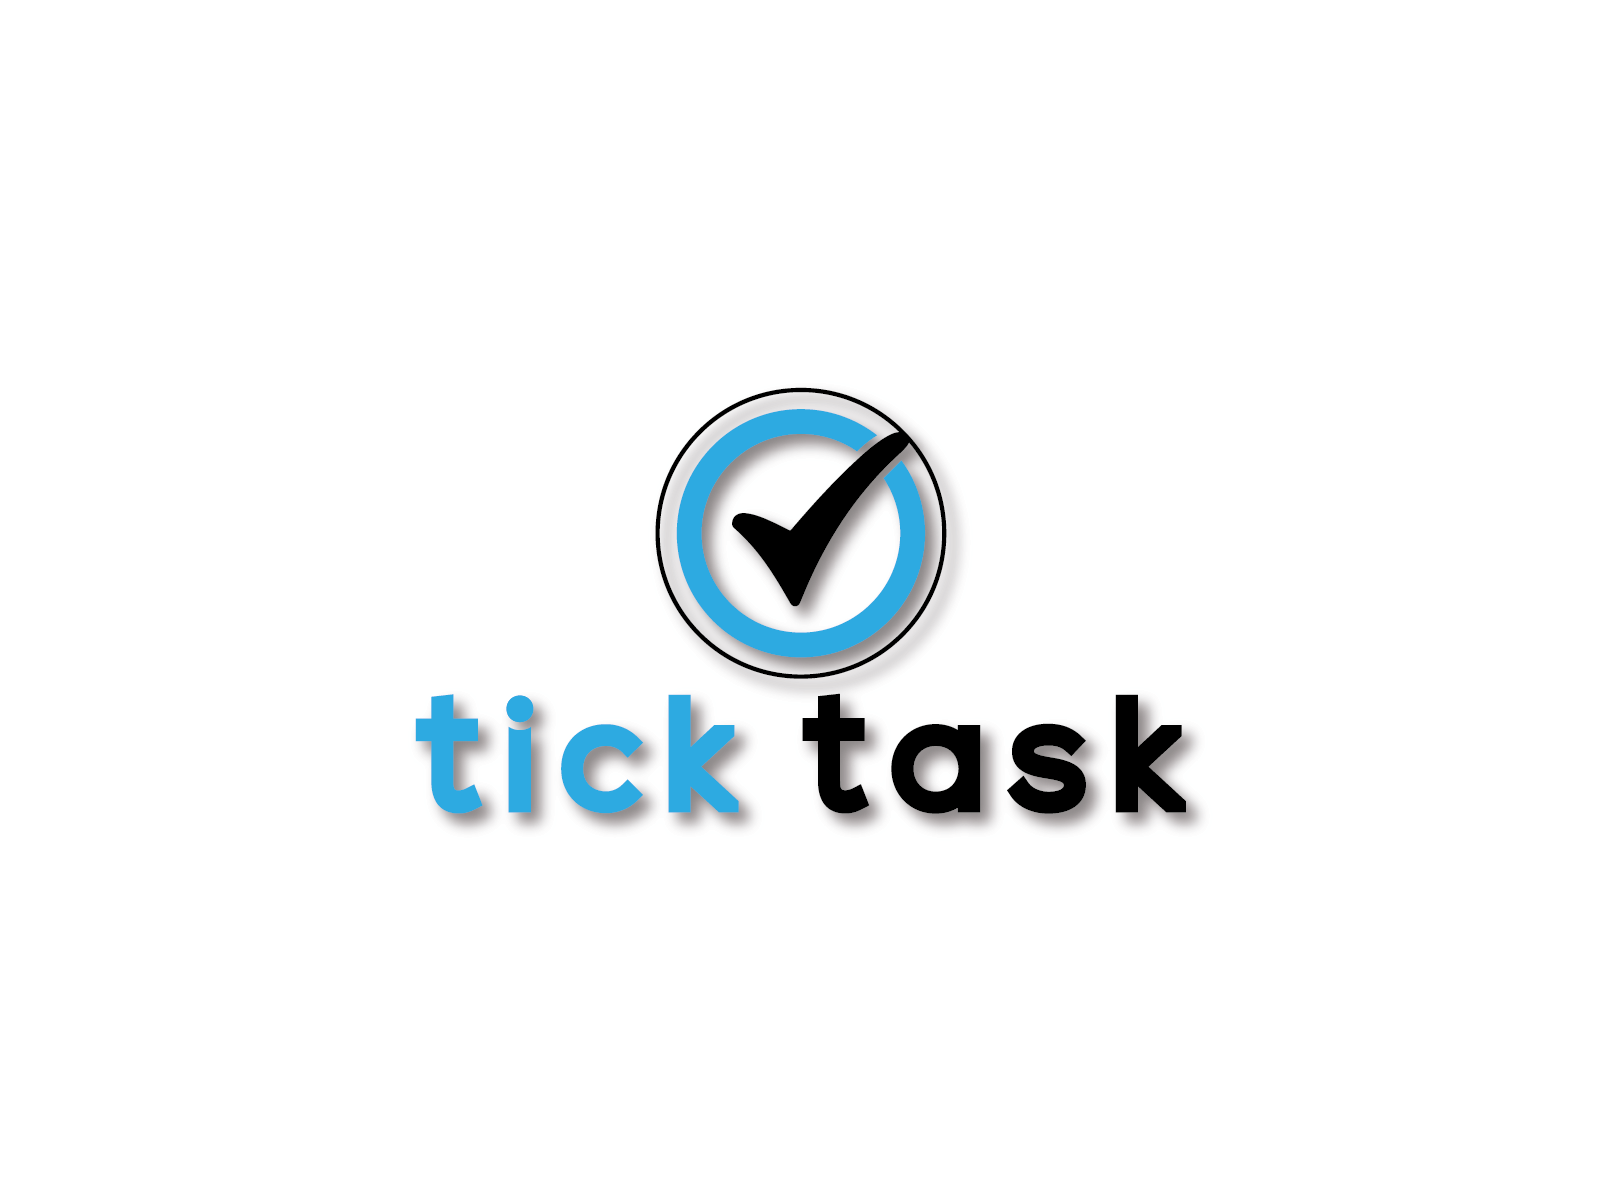 Task manager png images | PNGEgg